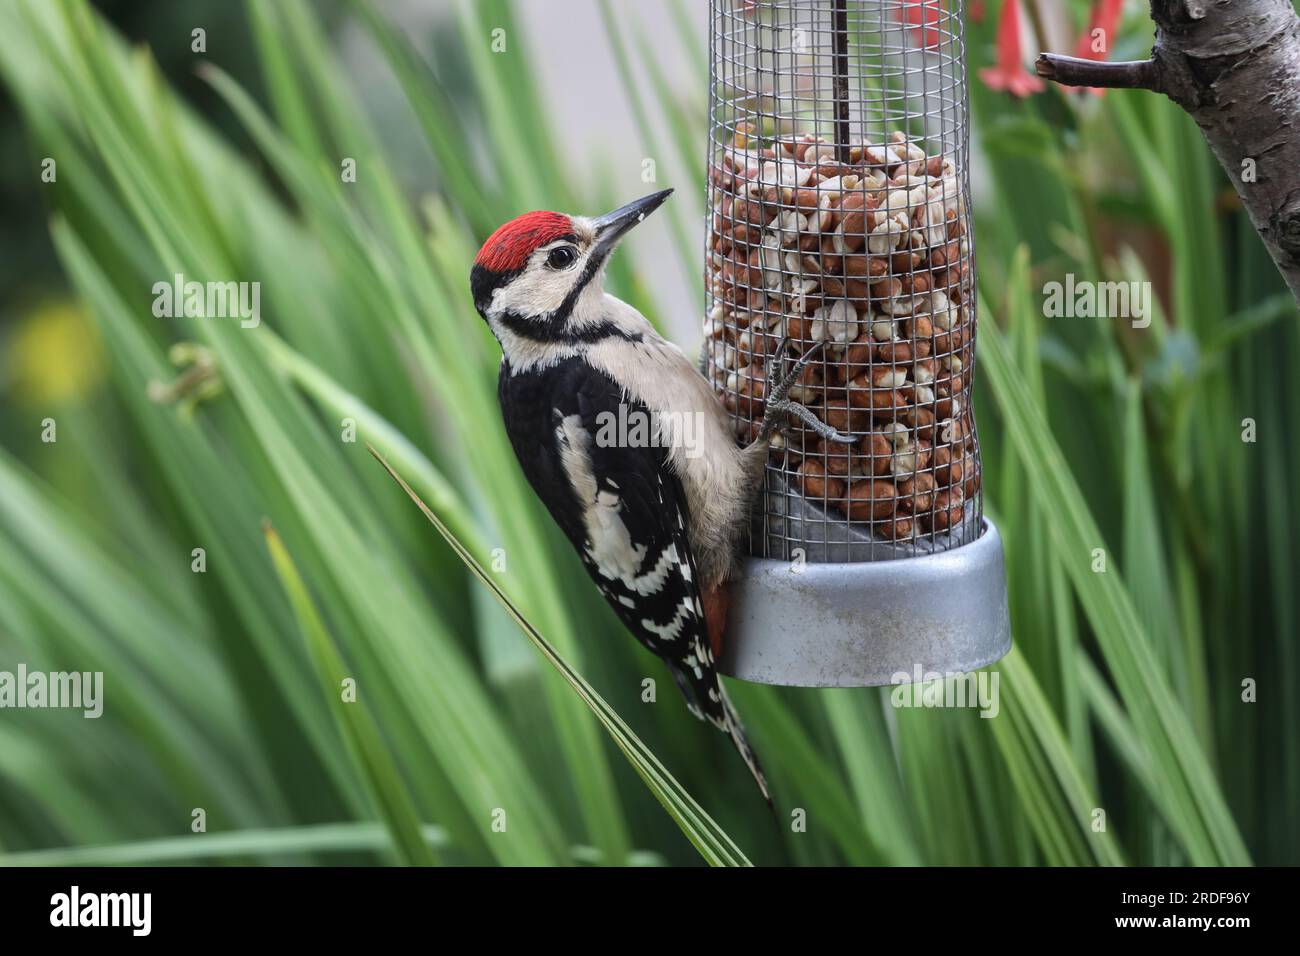 Juvenile Great Spotted Woodpecker (Dendrocopus major) Feeding in a Garden Environment, UK. Stock Photo